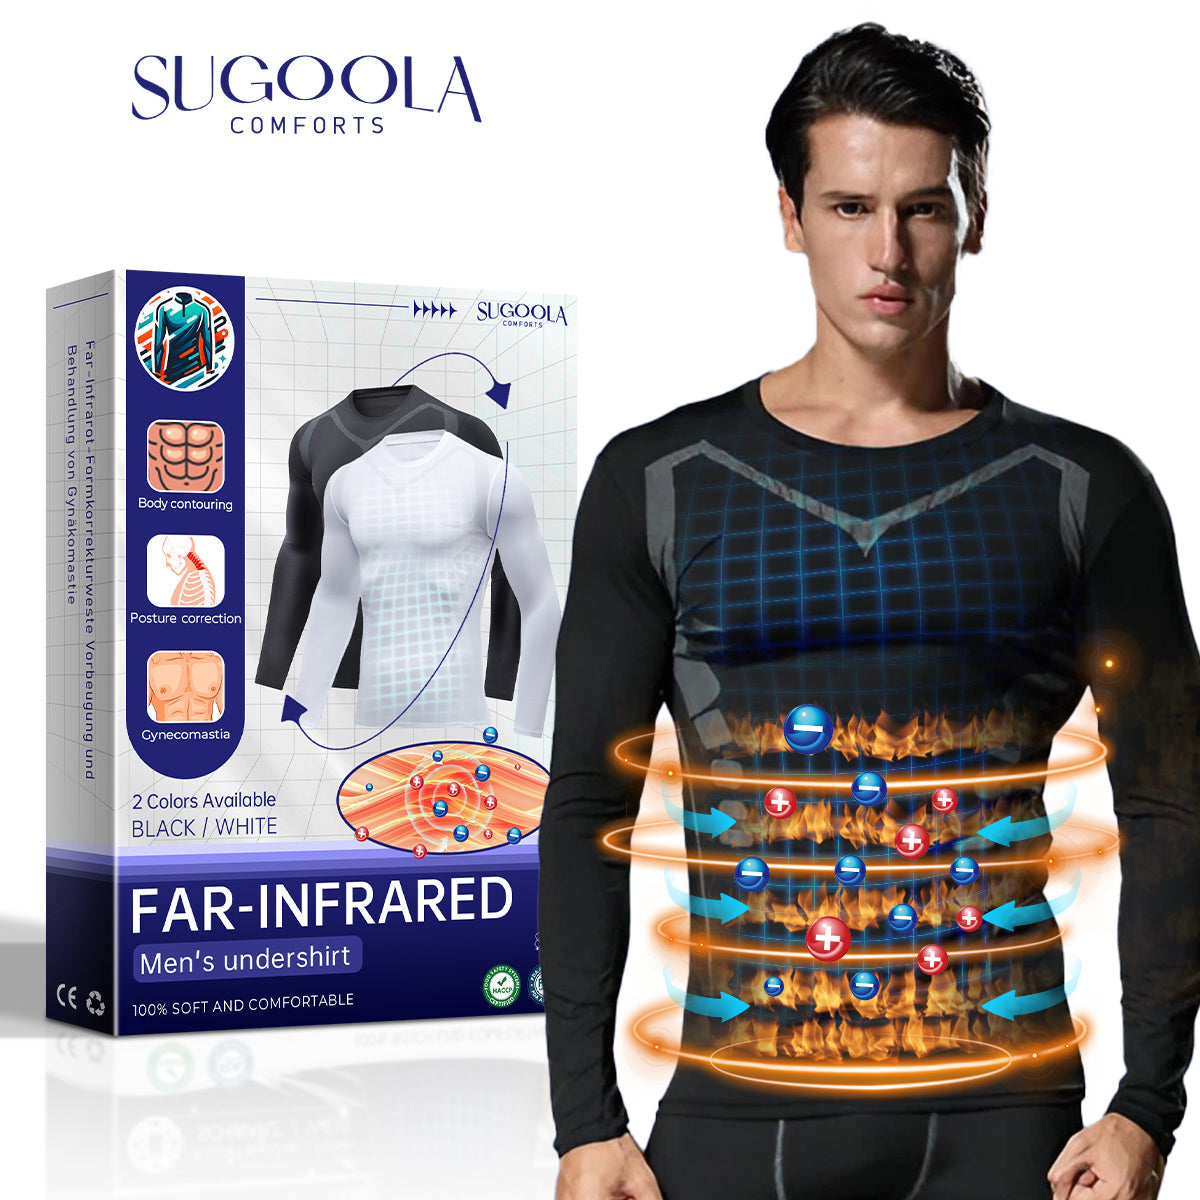 Sugoola™ Far-Infrared Tourmaline Magnetic Mens Undershirt